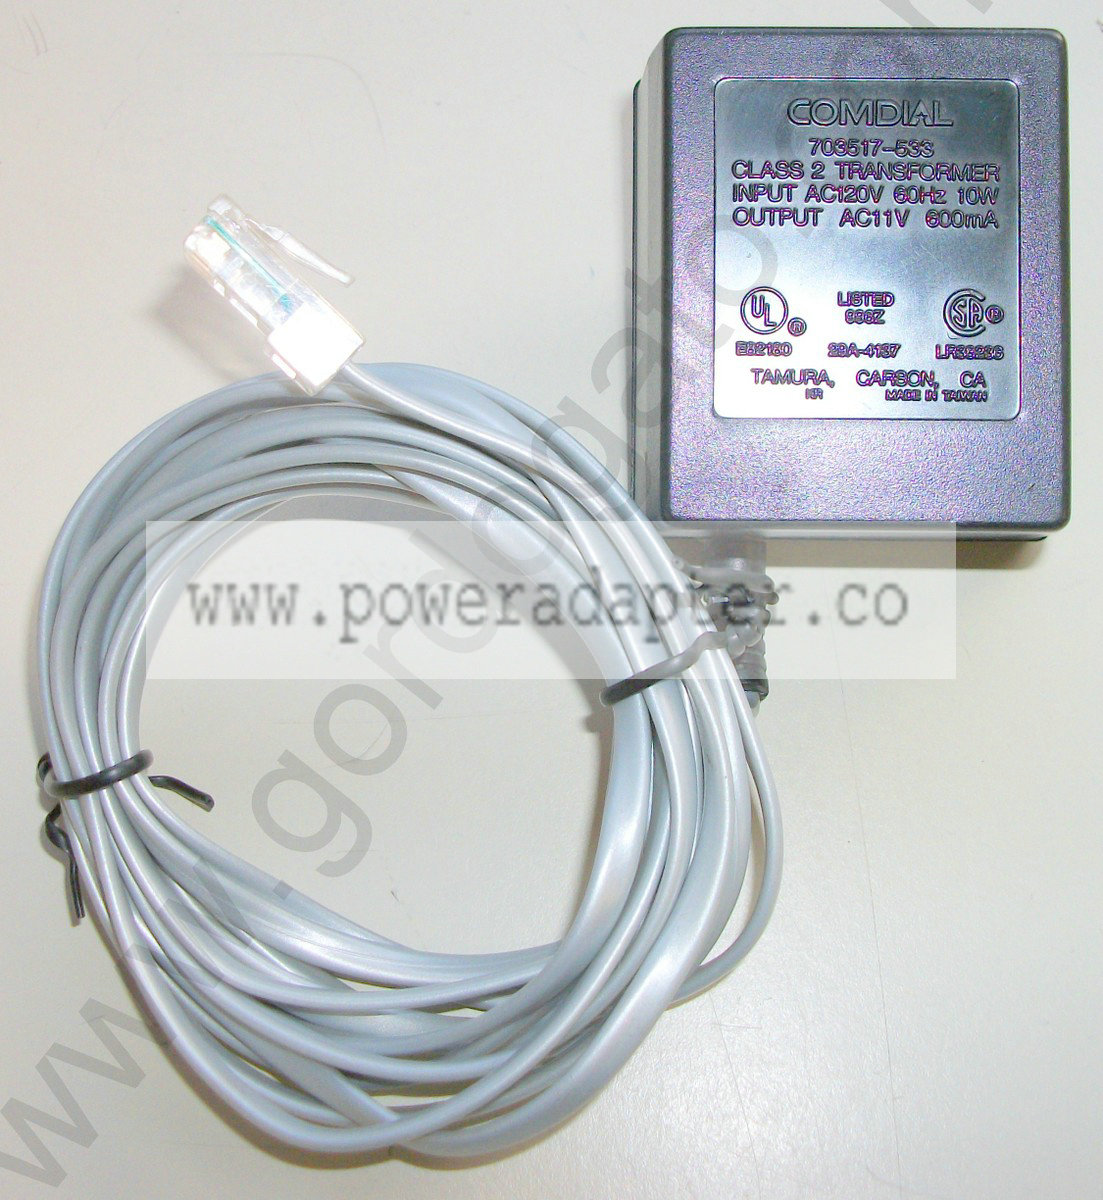 Comdial 703517-533 AC Adapter Transformer 11VAC, 600mA [703517-533] Input: 120VAC 60Hz 10W, Output: 11VAC 600mA. For u